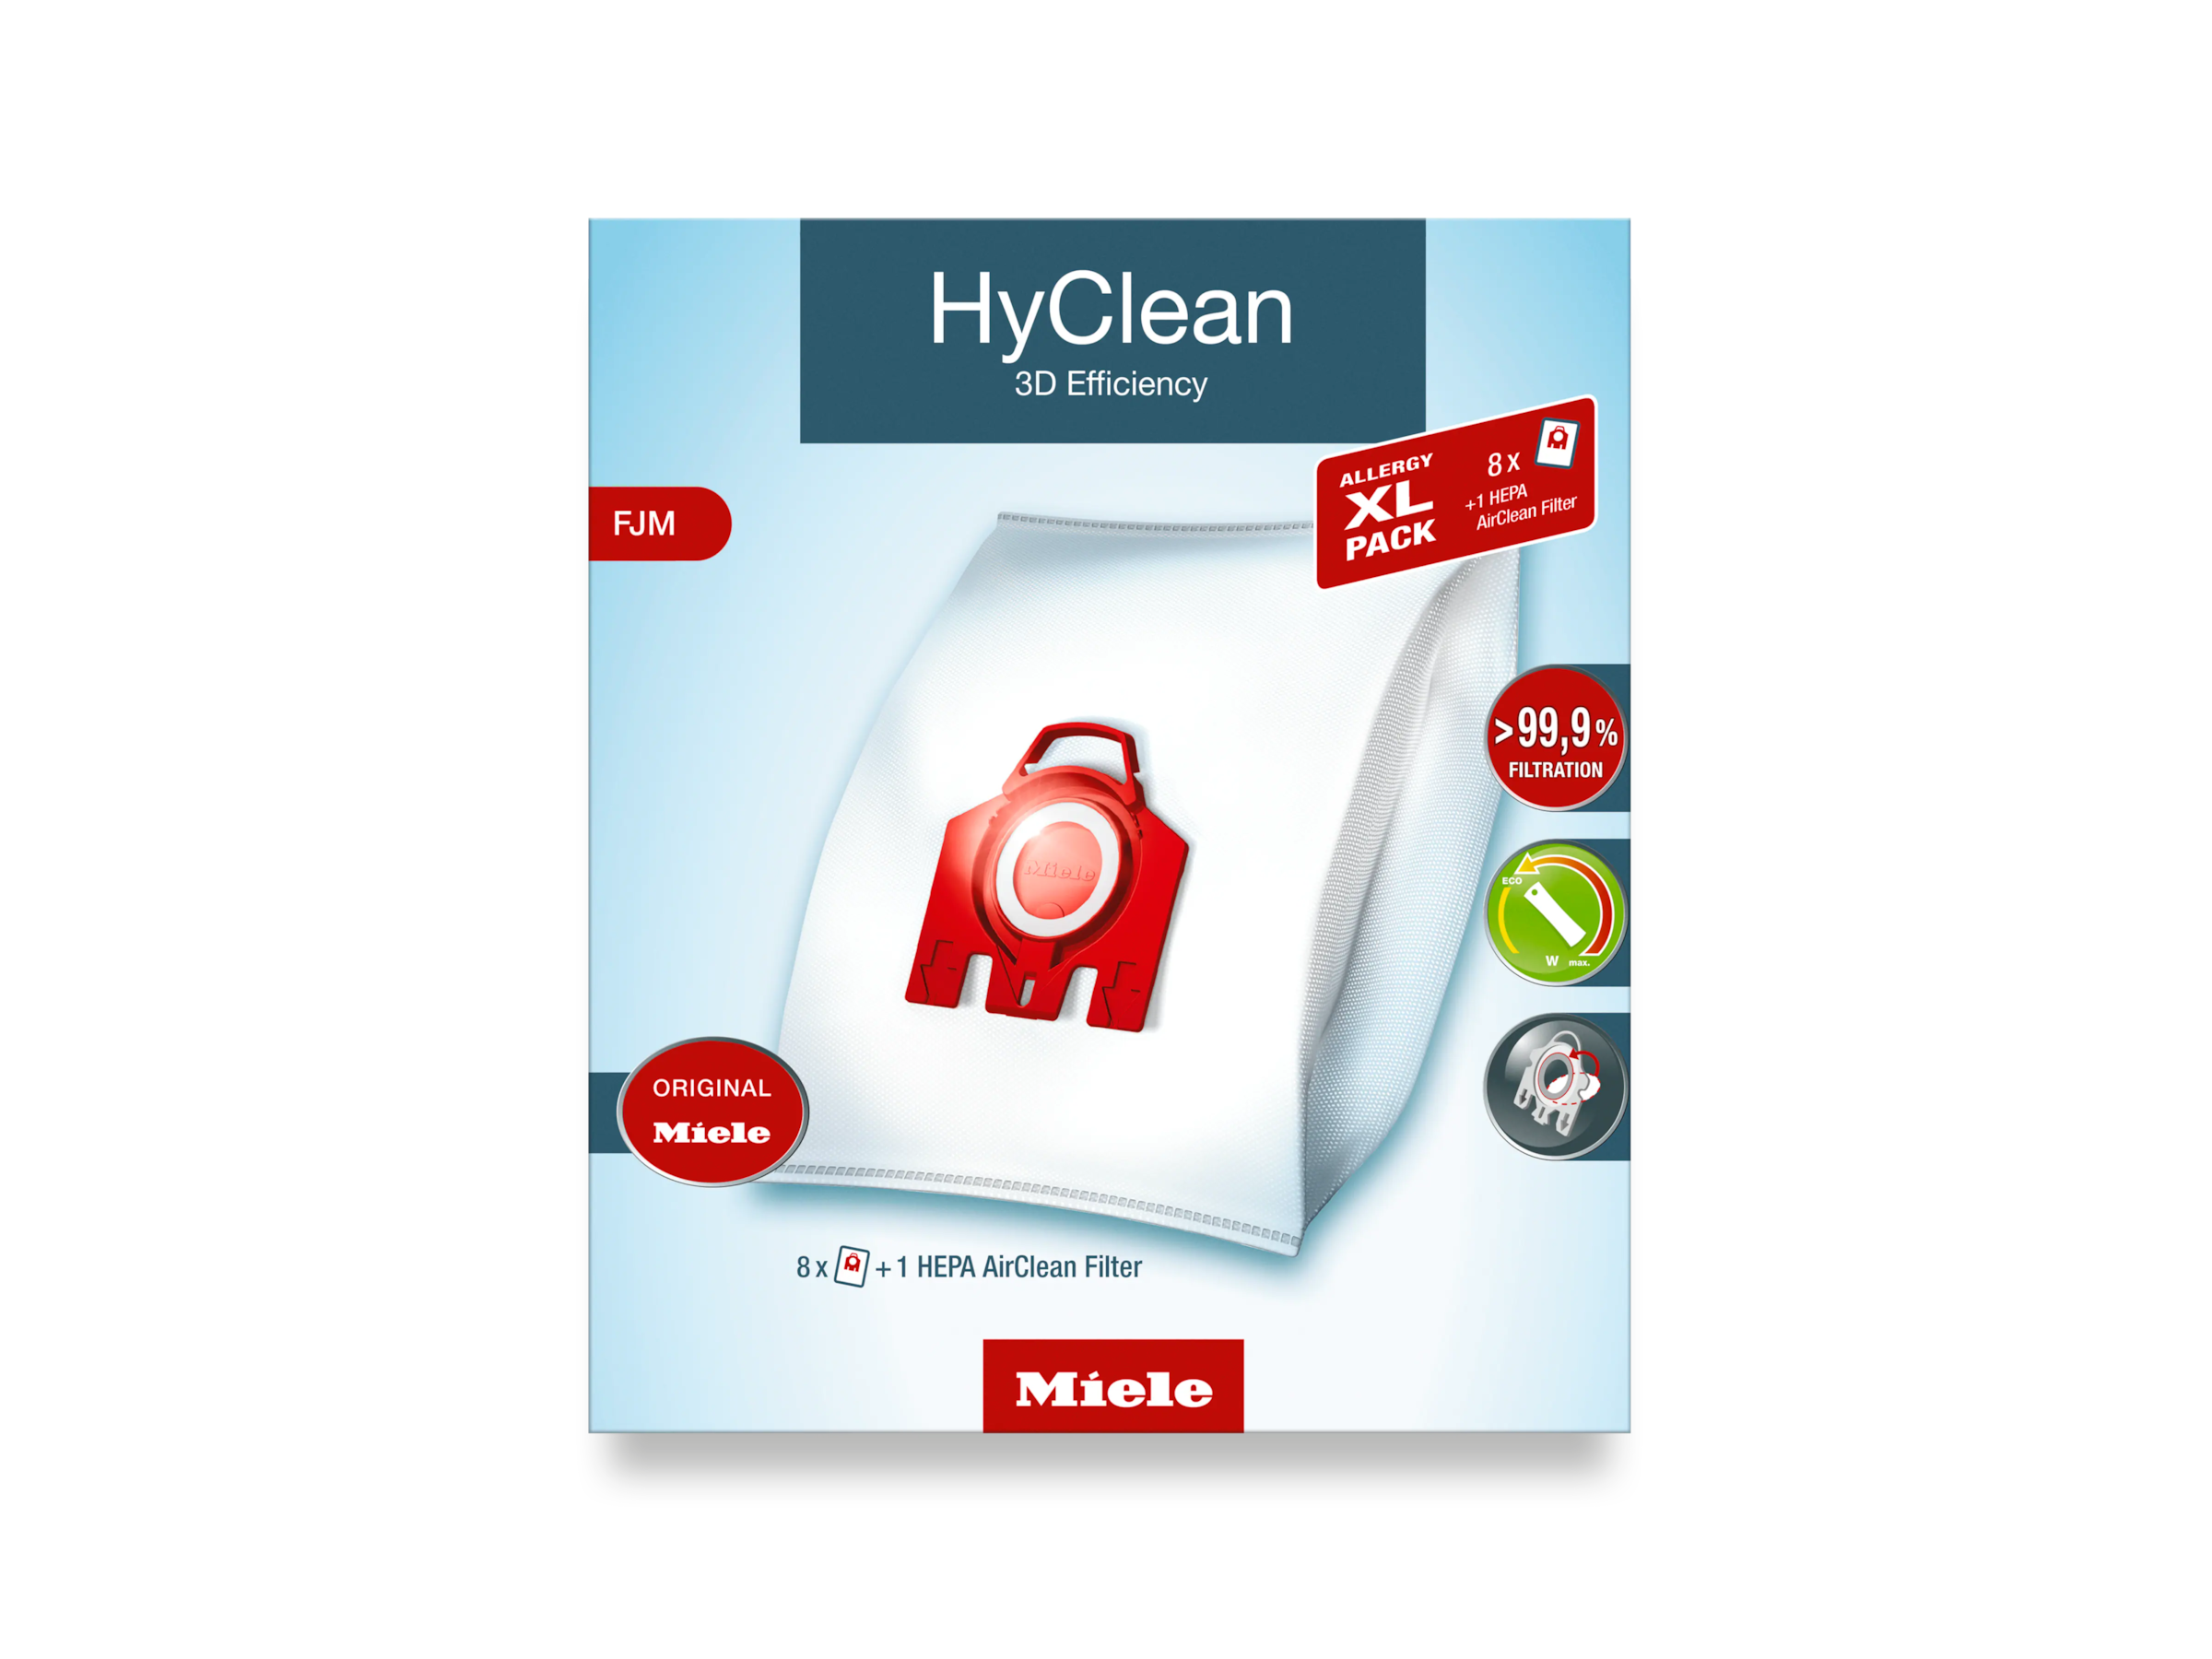 Staubsaugerbeutel »Allergy XL-Pack HyClean 3D Efficiency FJM«